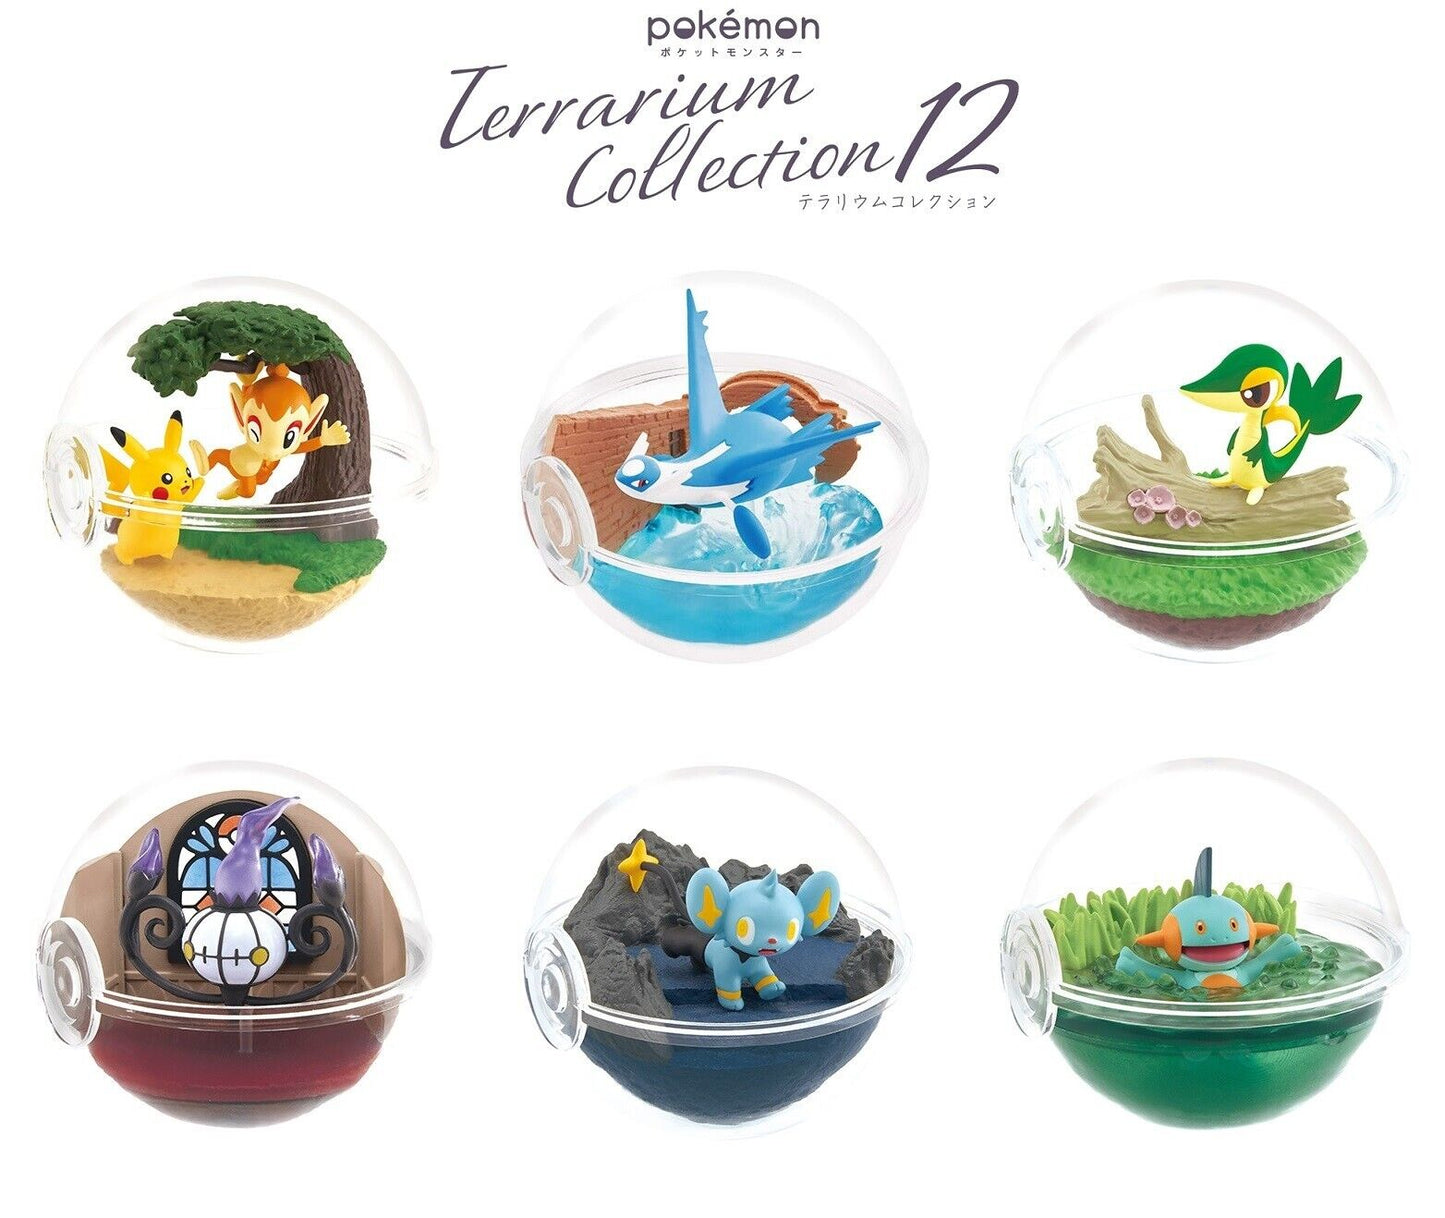 SNIVY - Pokemon Re-Ment Terrarium Collection 12 (NEW) Figure #3